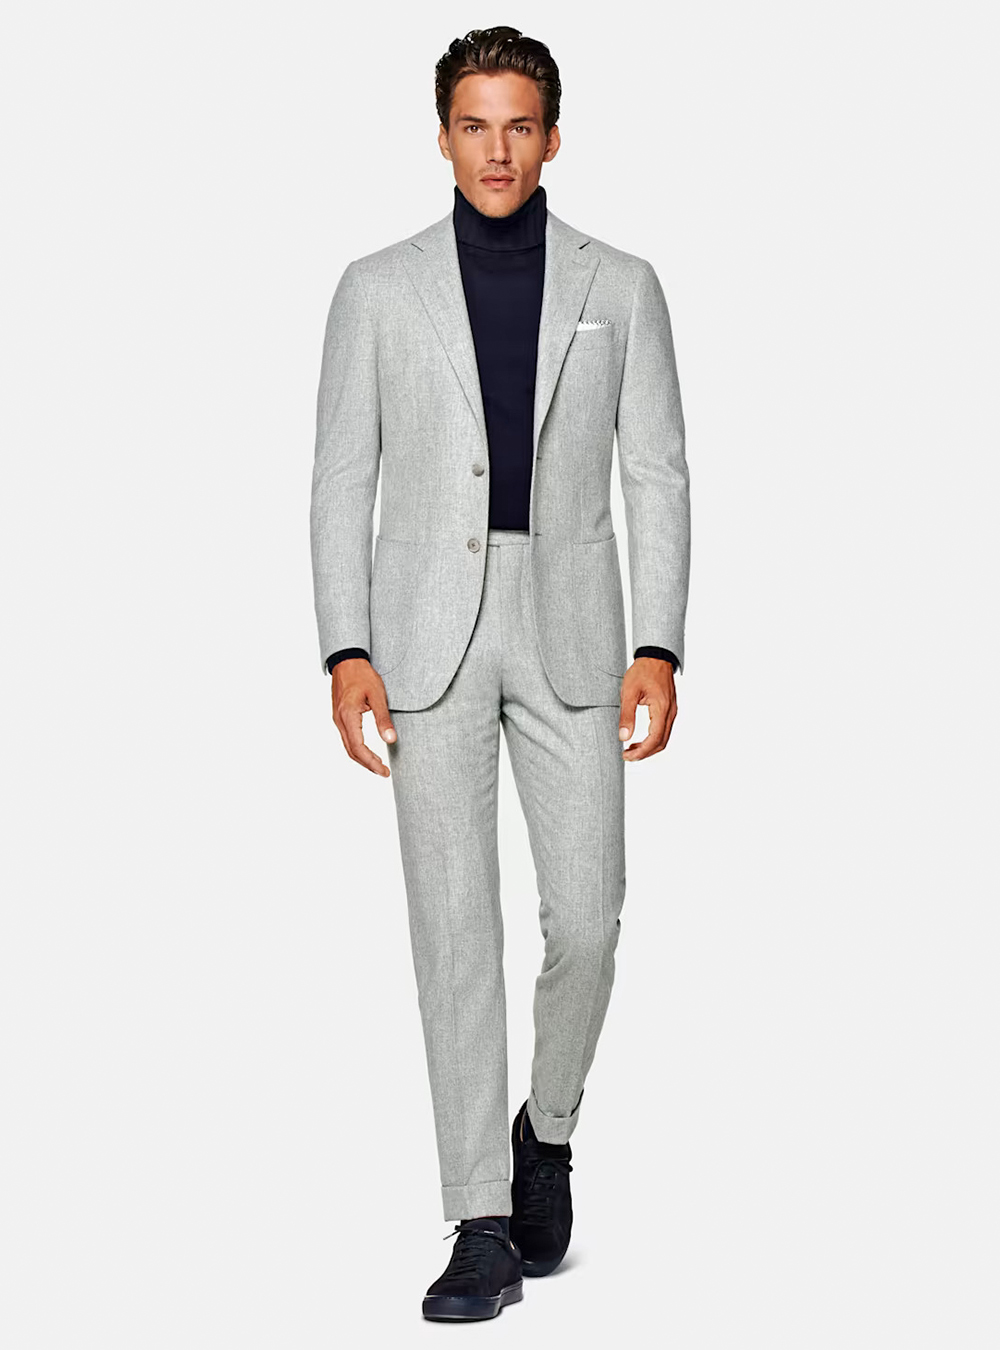 Light grey suit, navy turtleneck, and navy sneakers